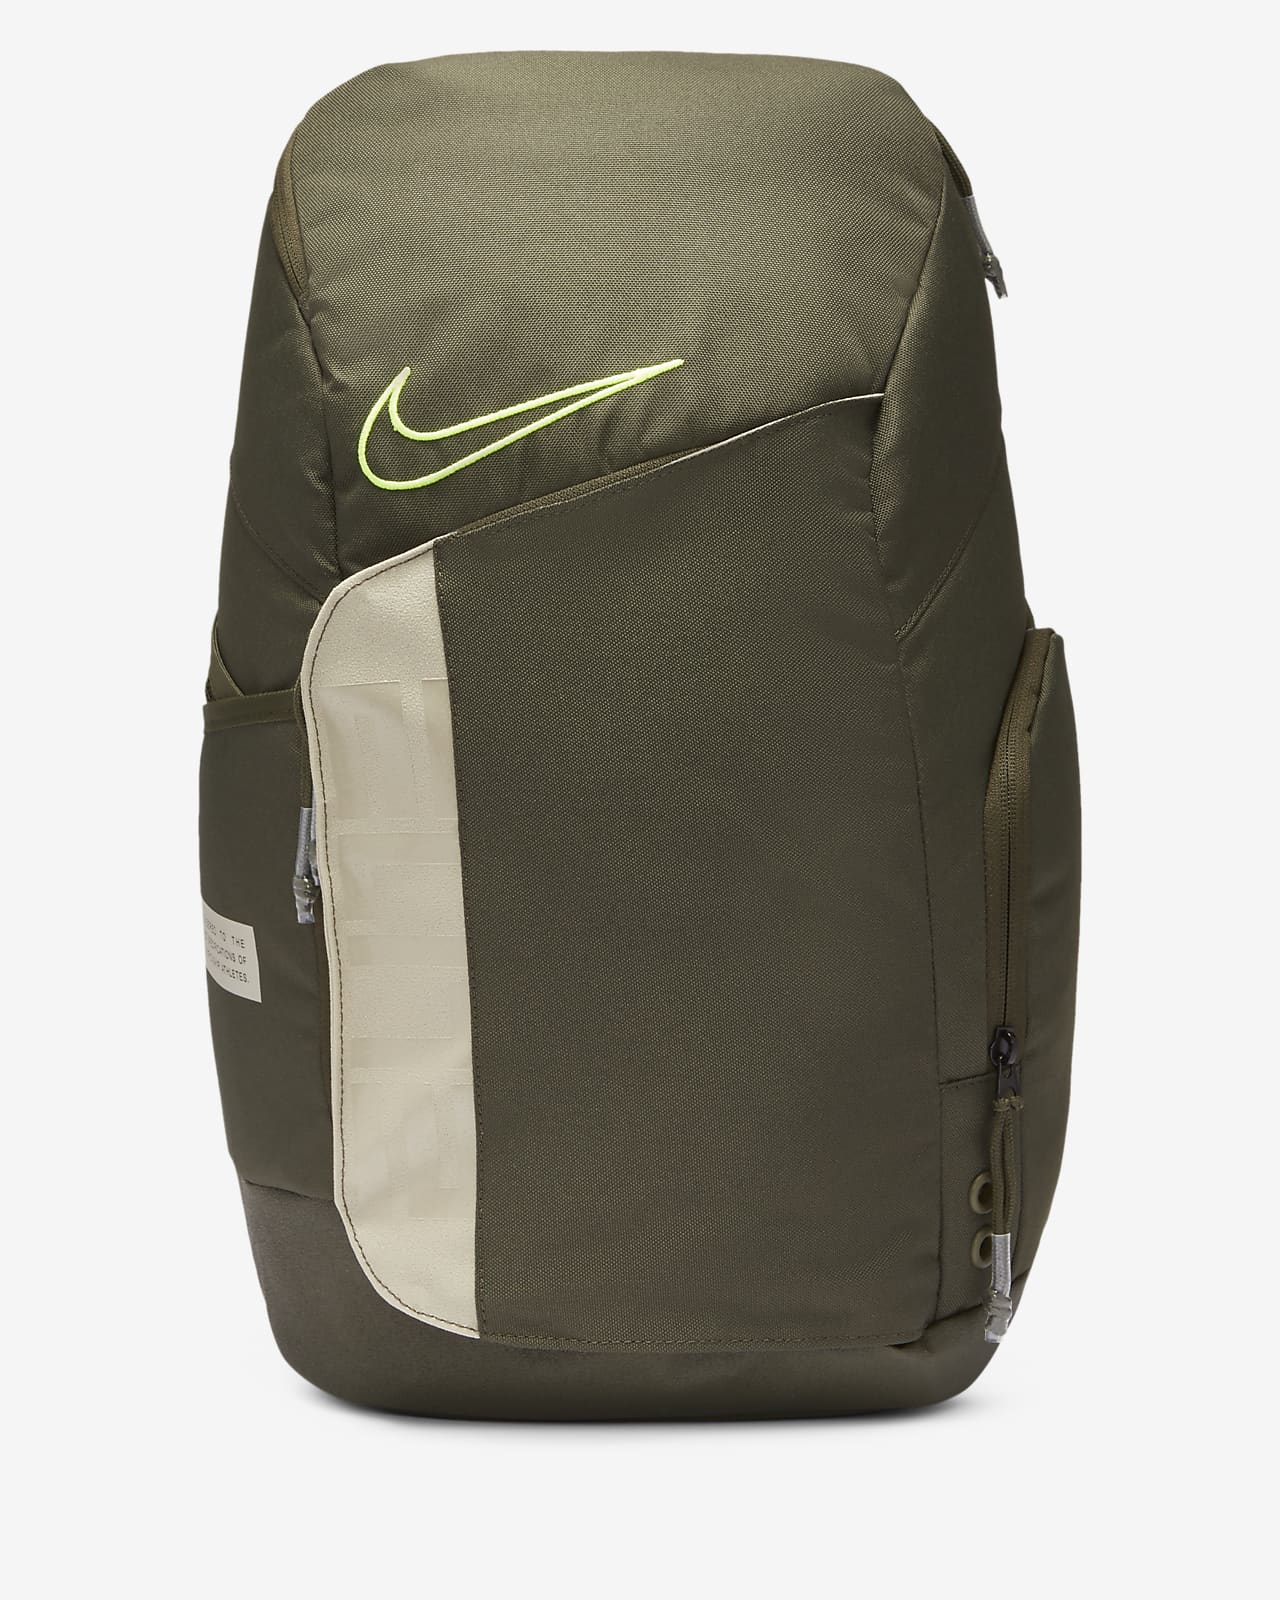 basketball backpacks on sale